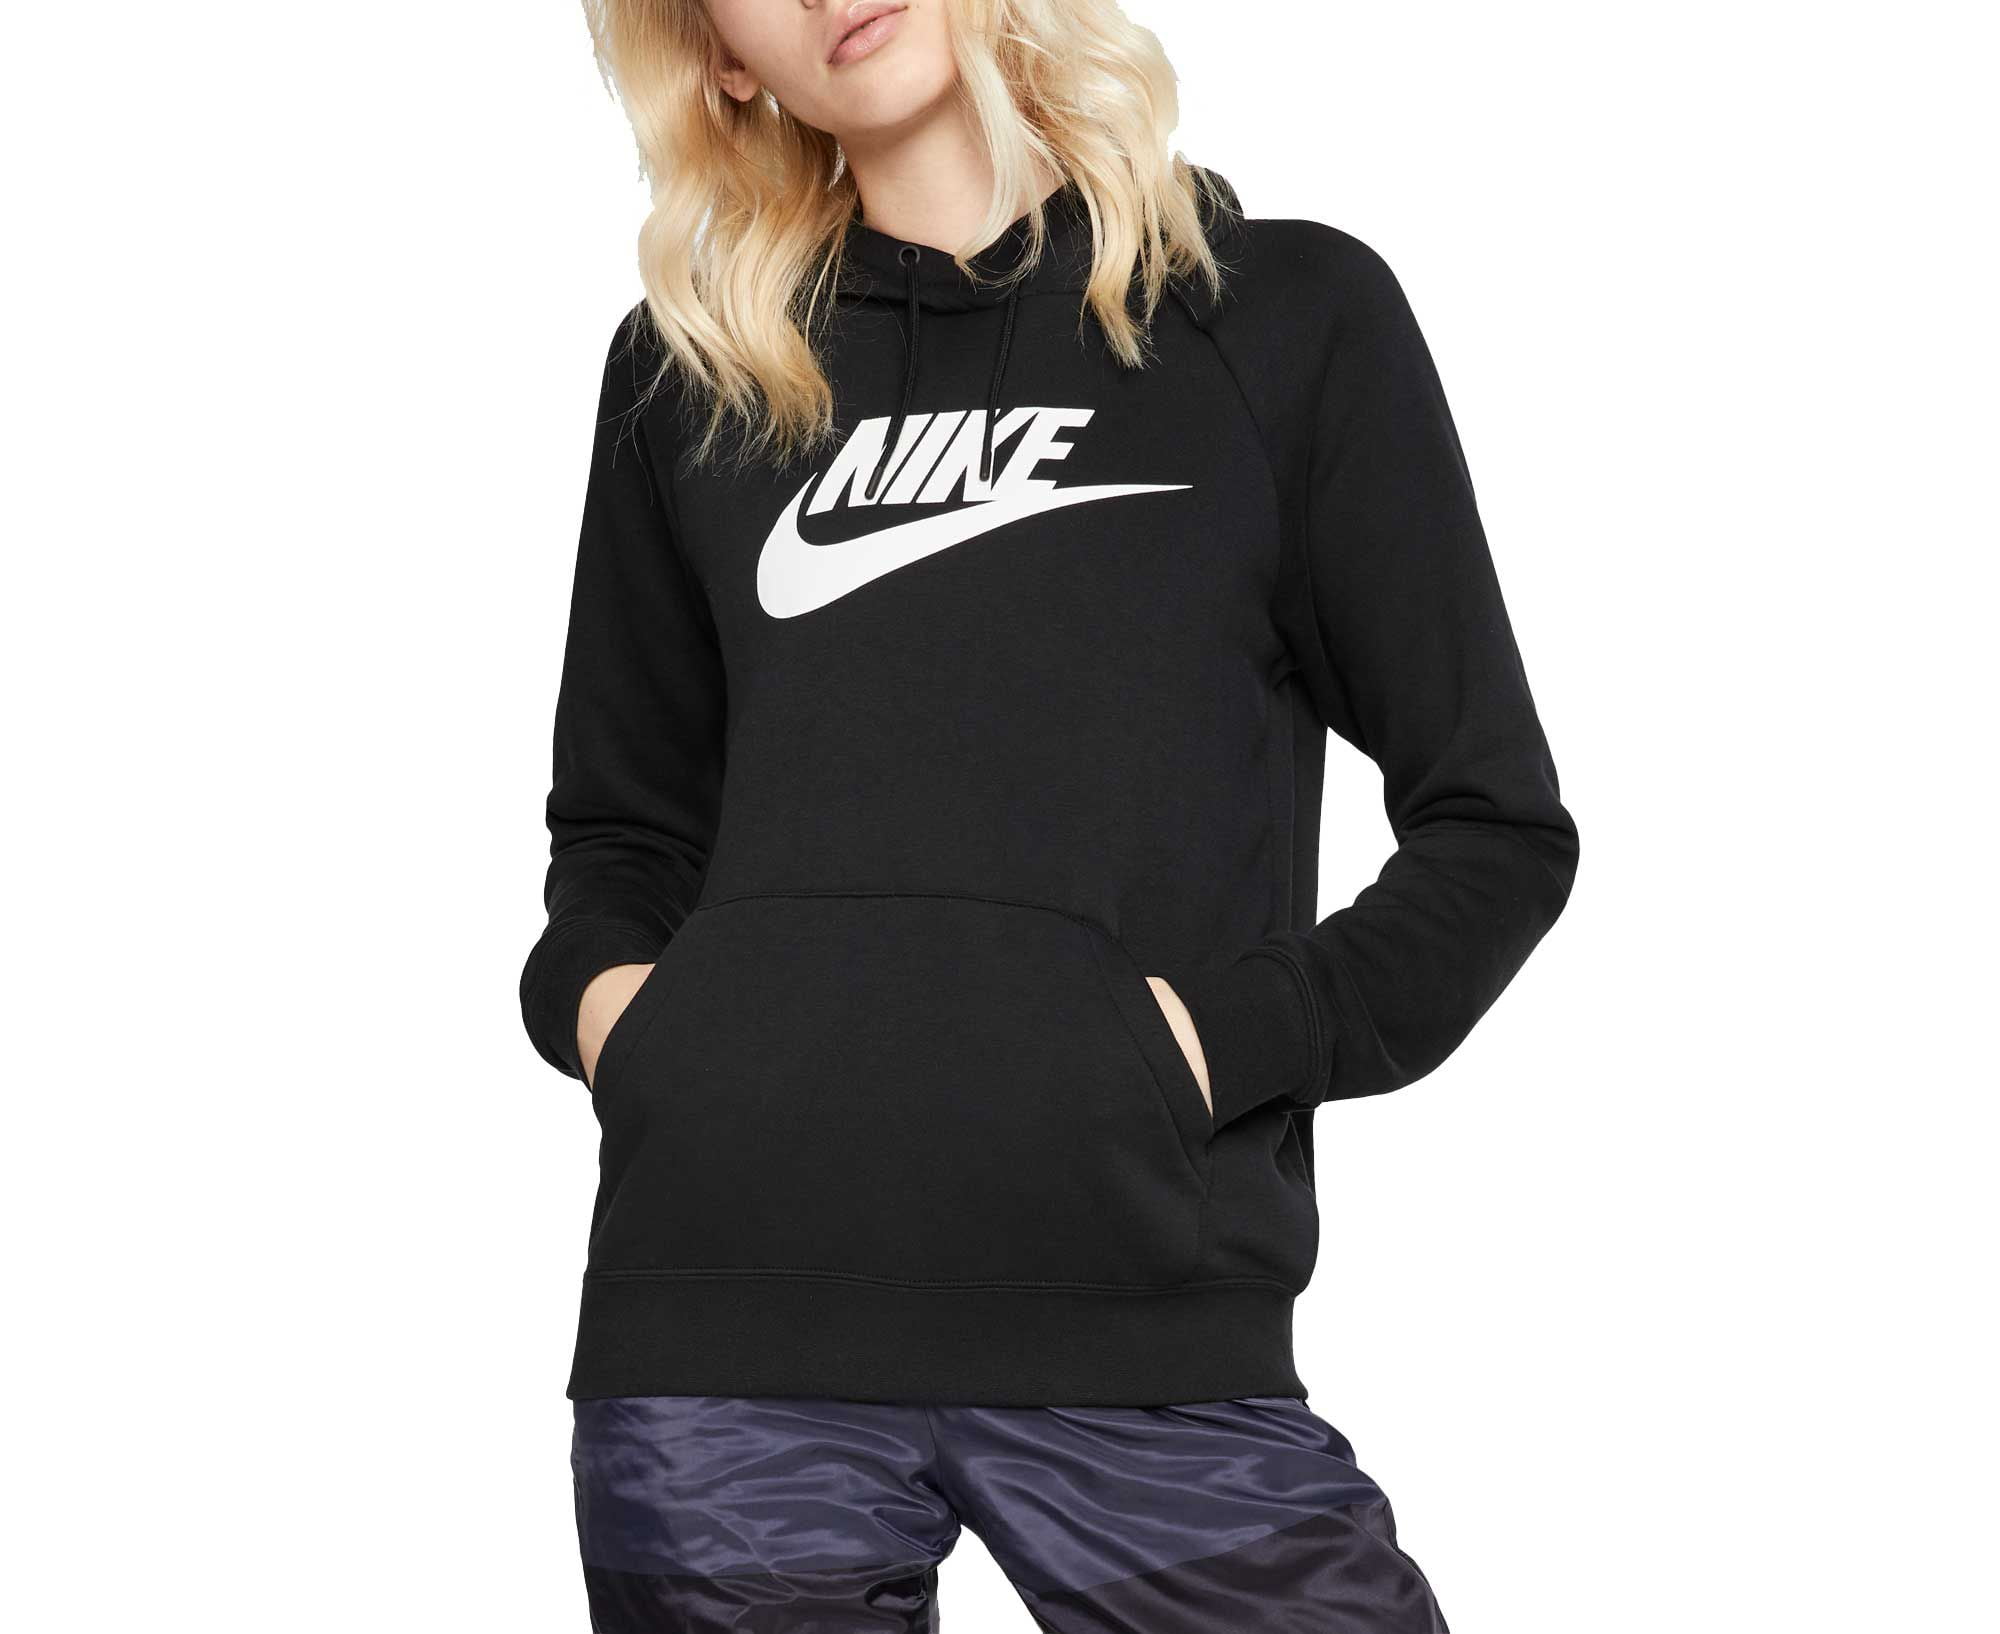 Bloquear cambiar Muerto en el mundo Nike Sportswear Women's Essential Fleece Pullover Hoodie - Walmart.com